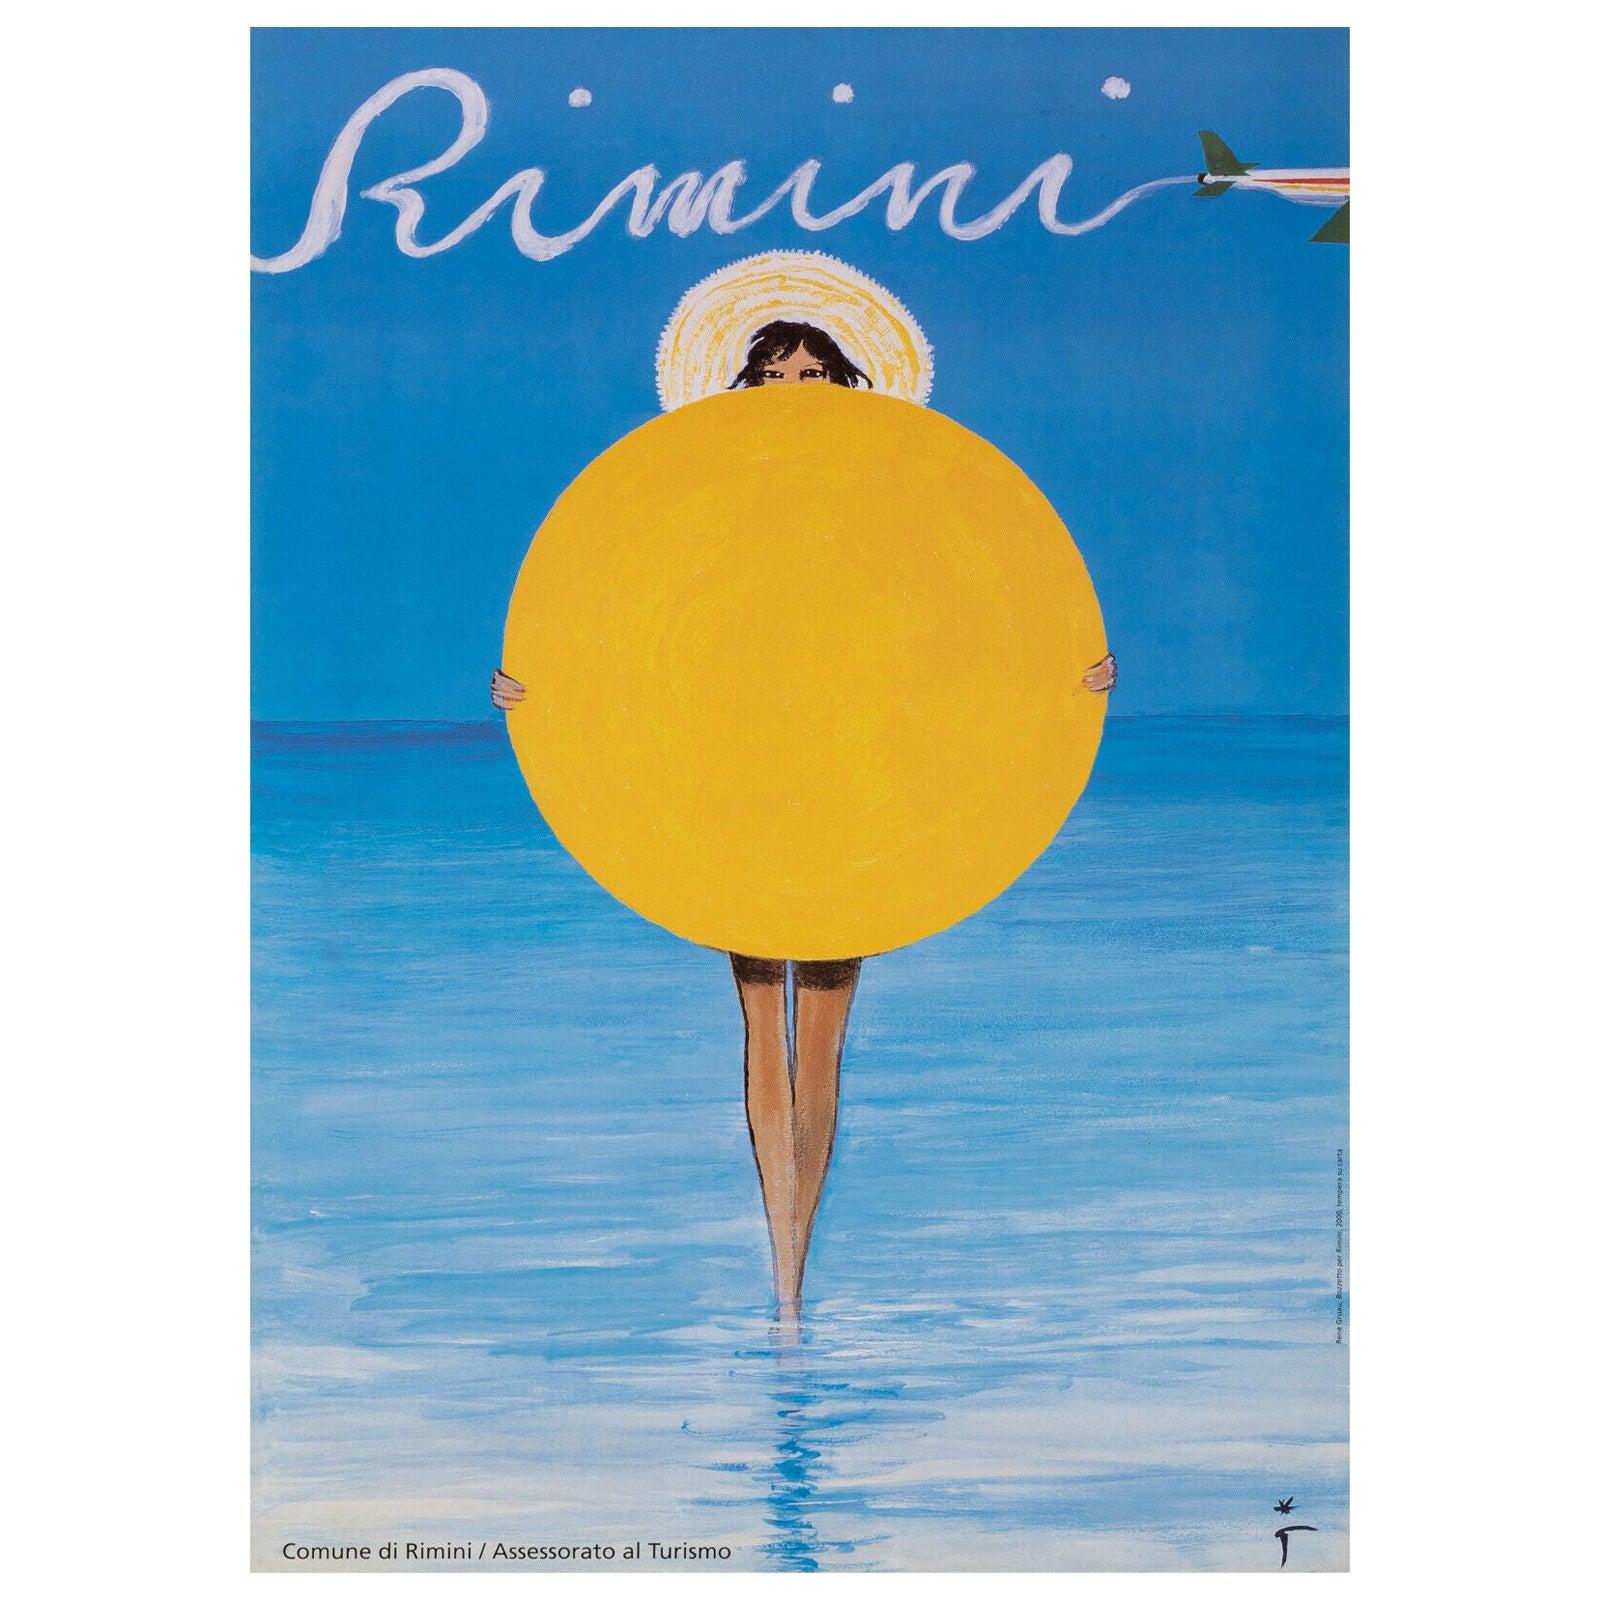 Original Vintage Poster-R. Gruau-Rimini-Italia-Vacances-Travel , 2000